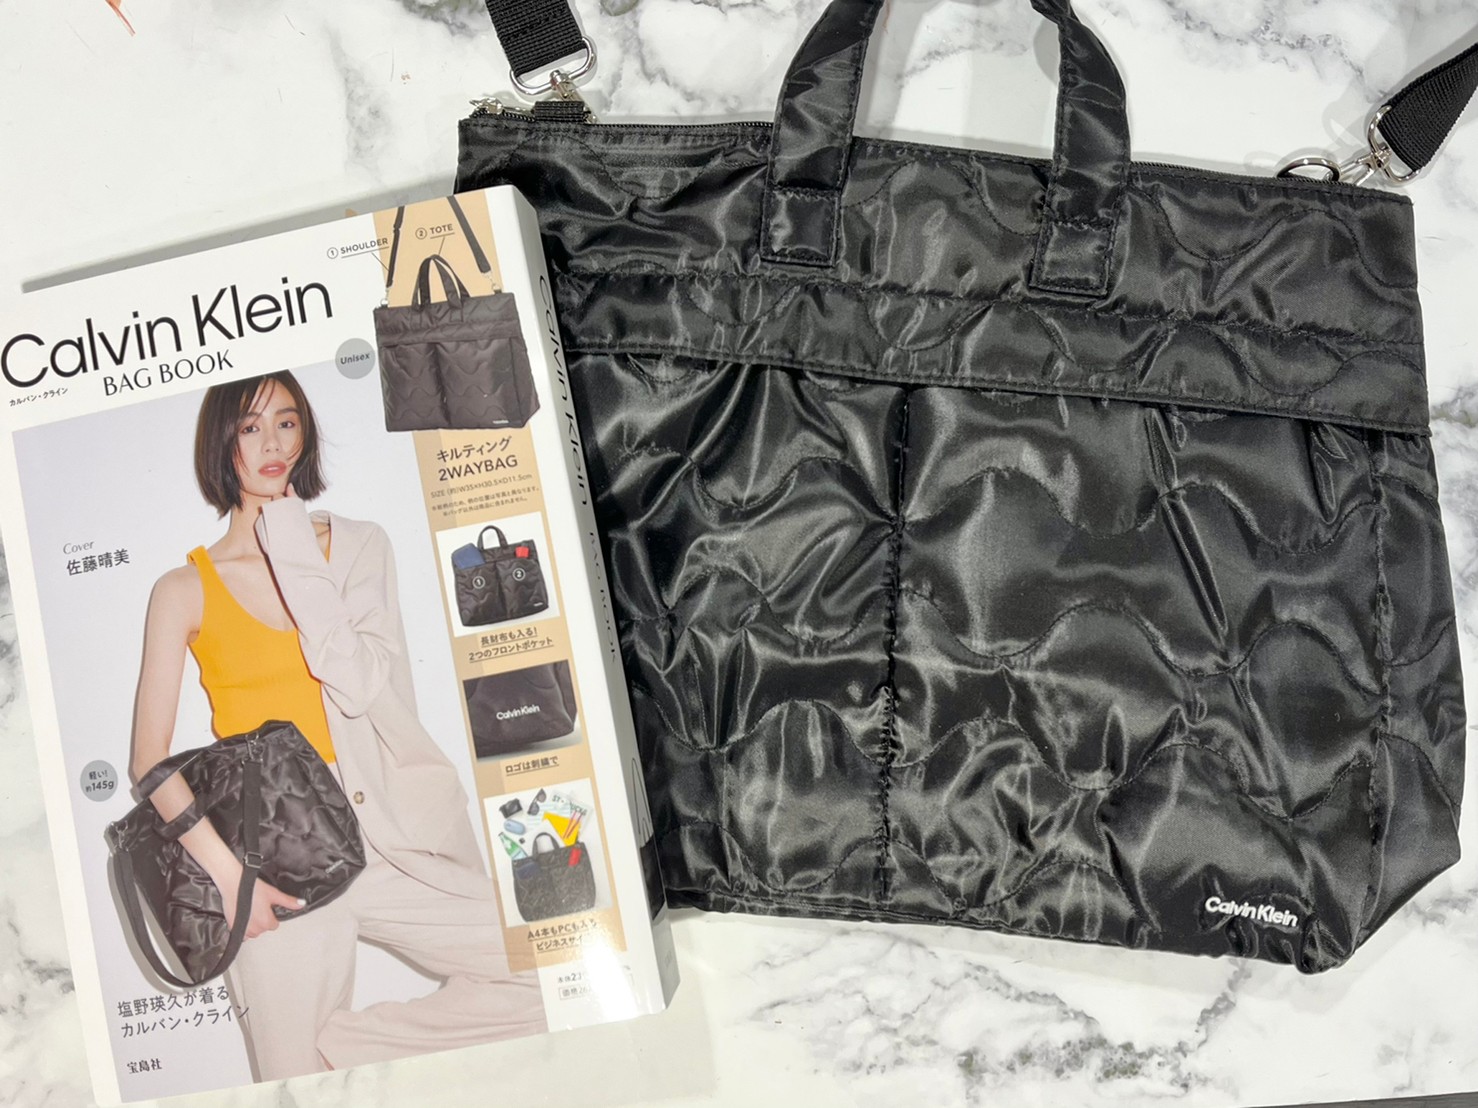 Calvin Klein BAG BOOKとキルティング 2WAYBAGの画像